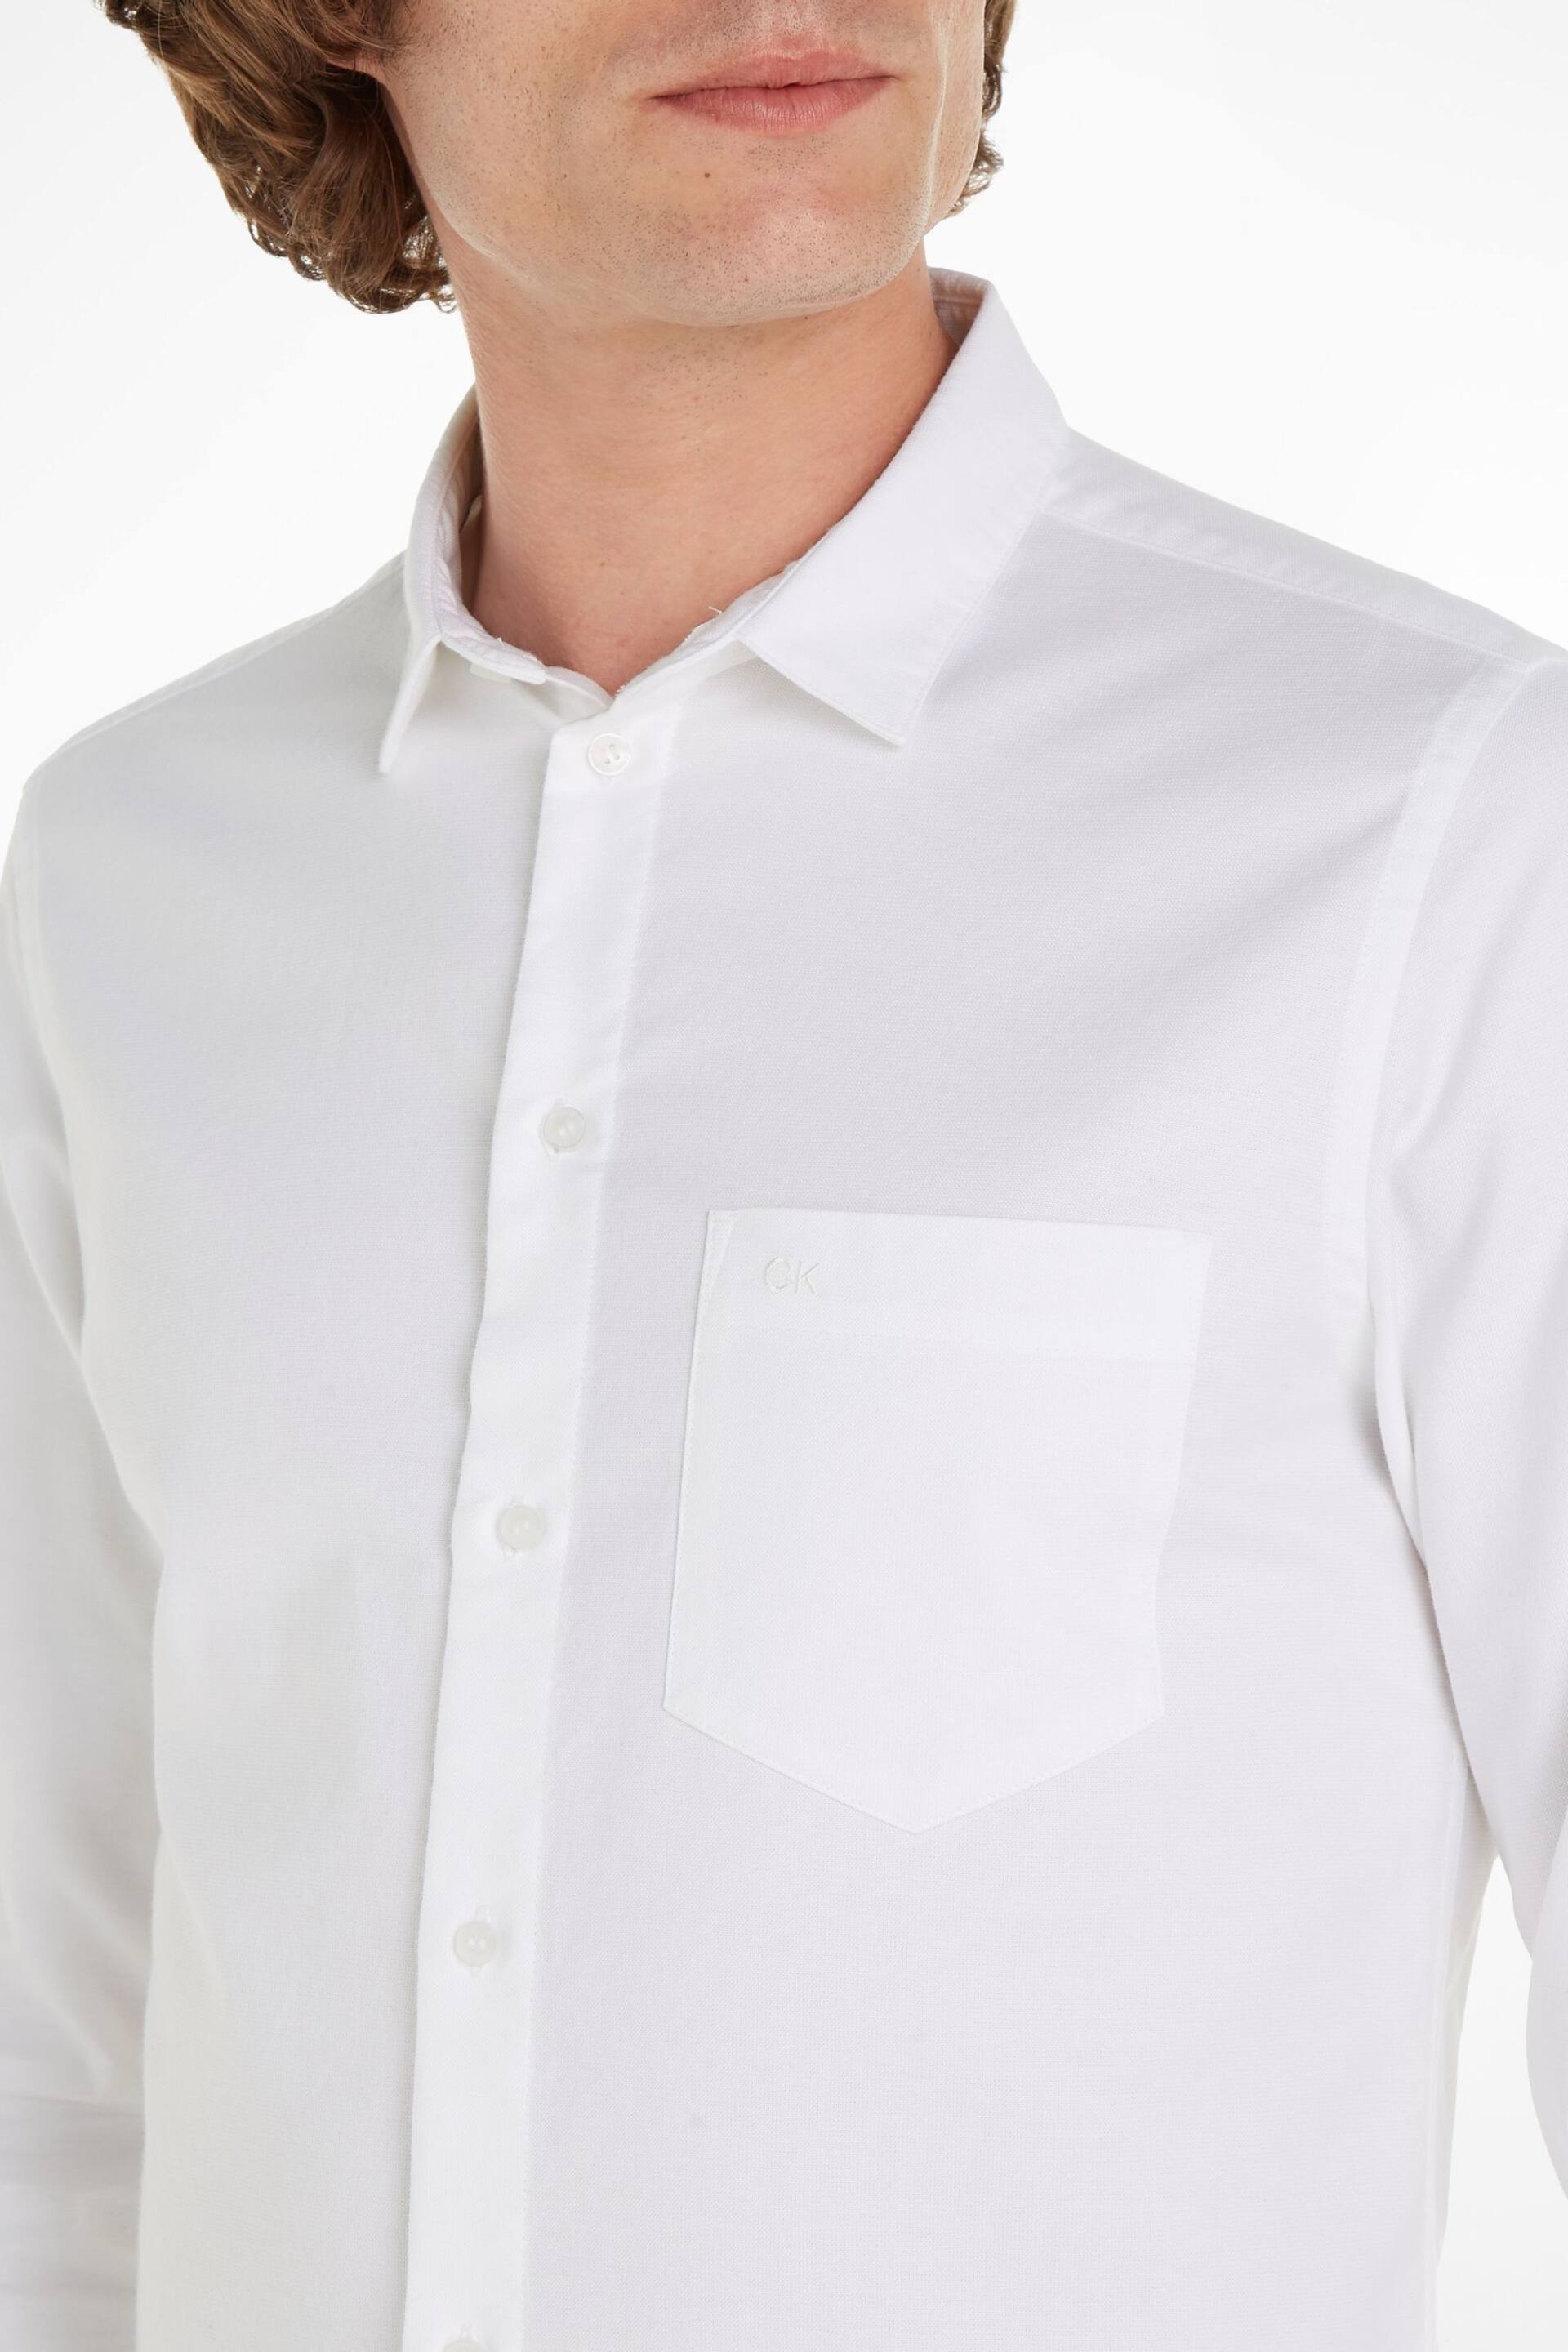 Calvin Klein White Stretch Oxford Shirt - Image 3 of 7